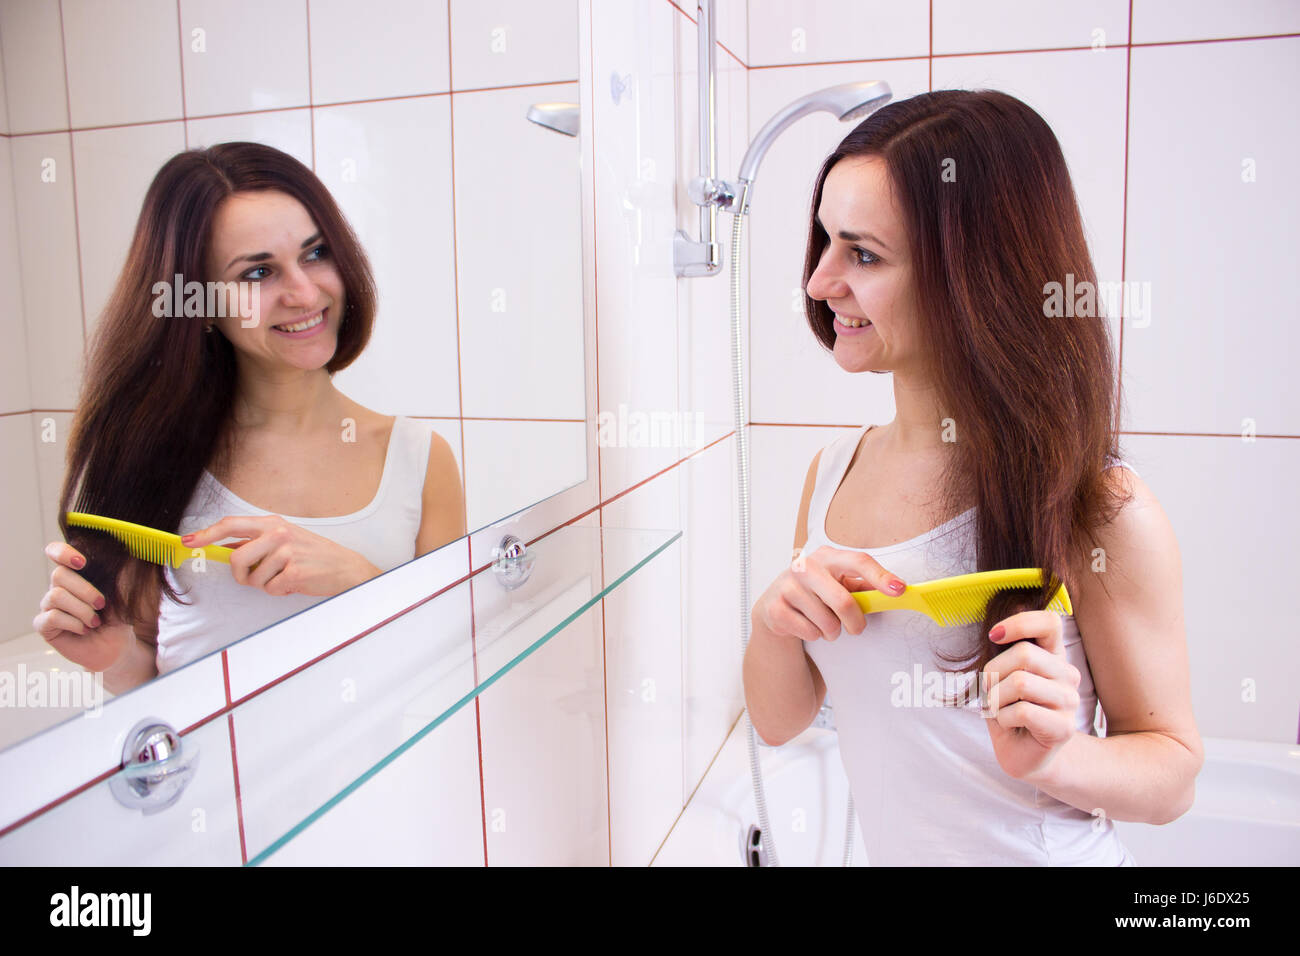 Junge Frau, Bürsten ihr Haar im Bad Stockfoto